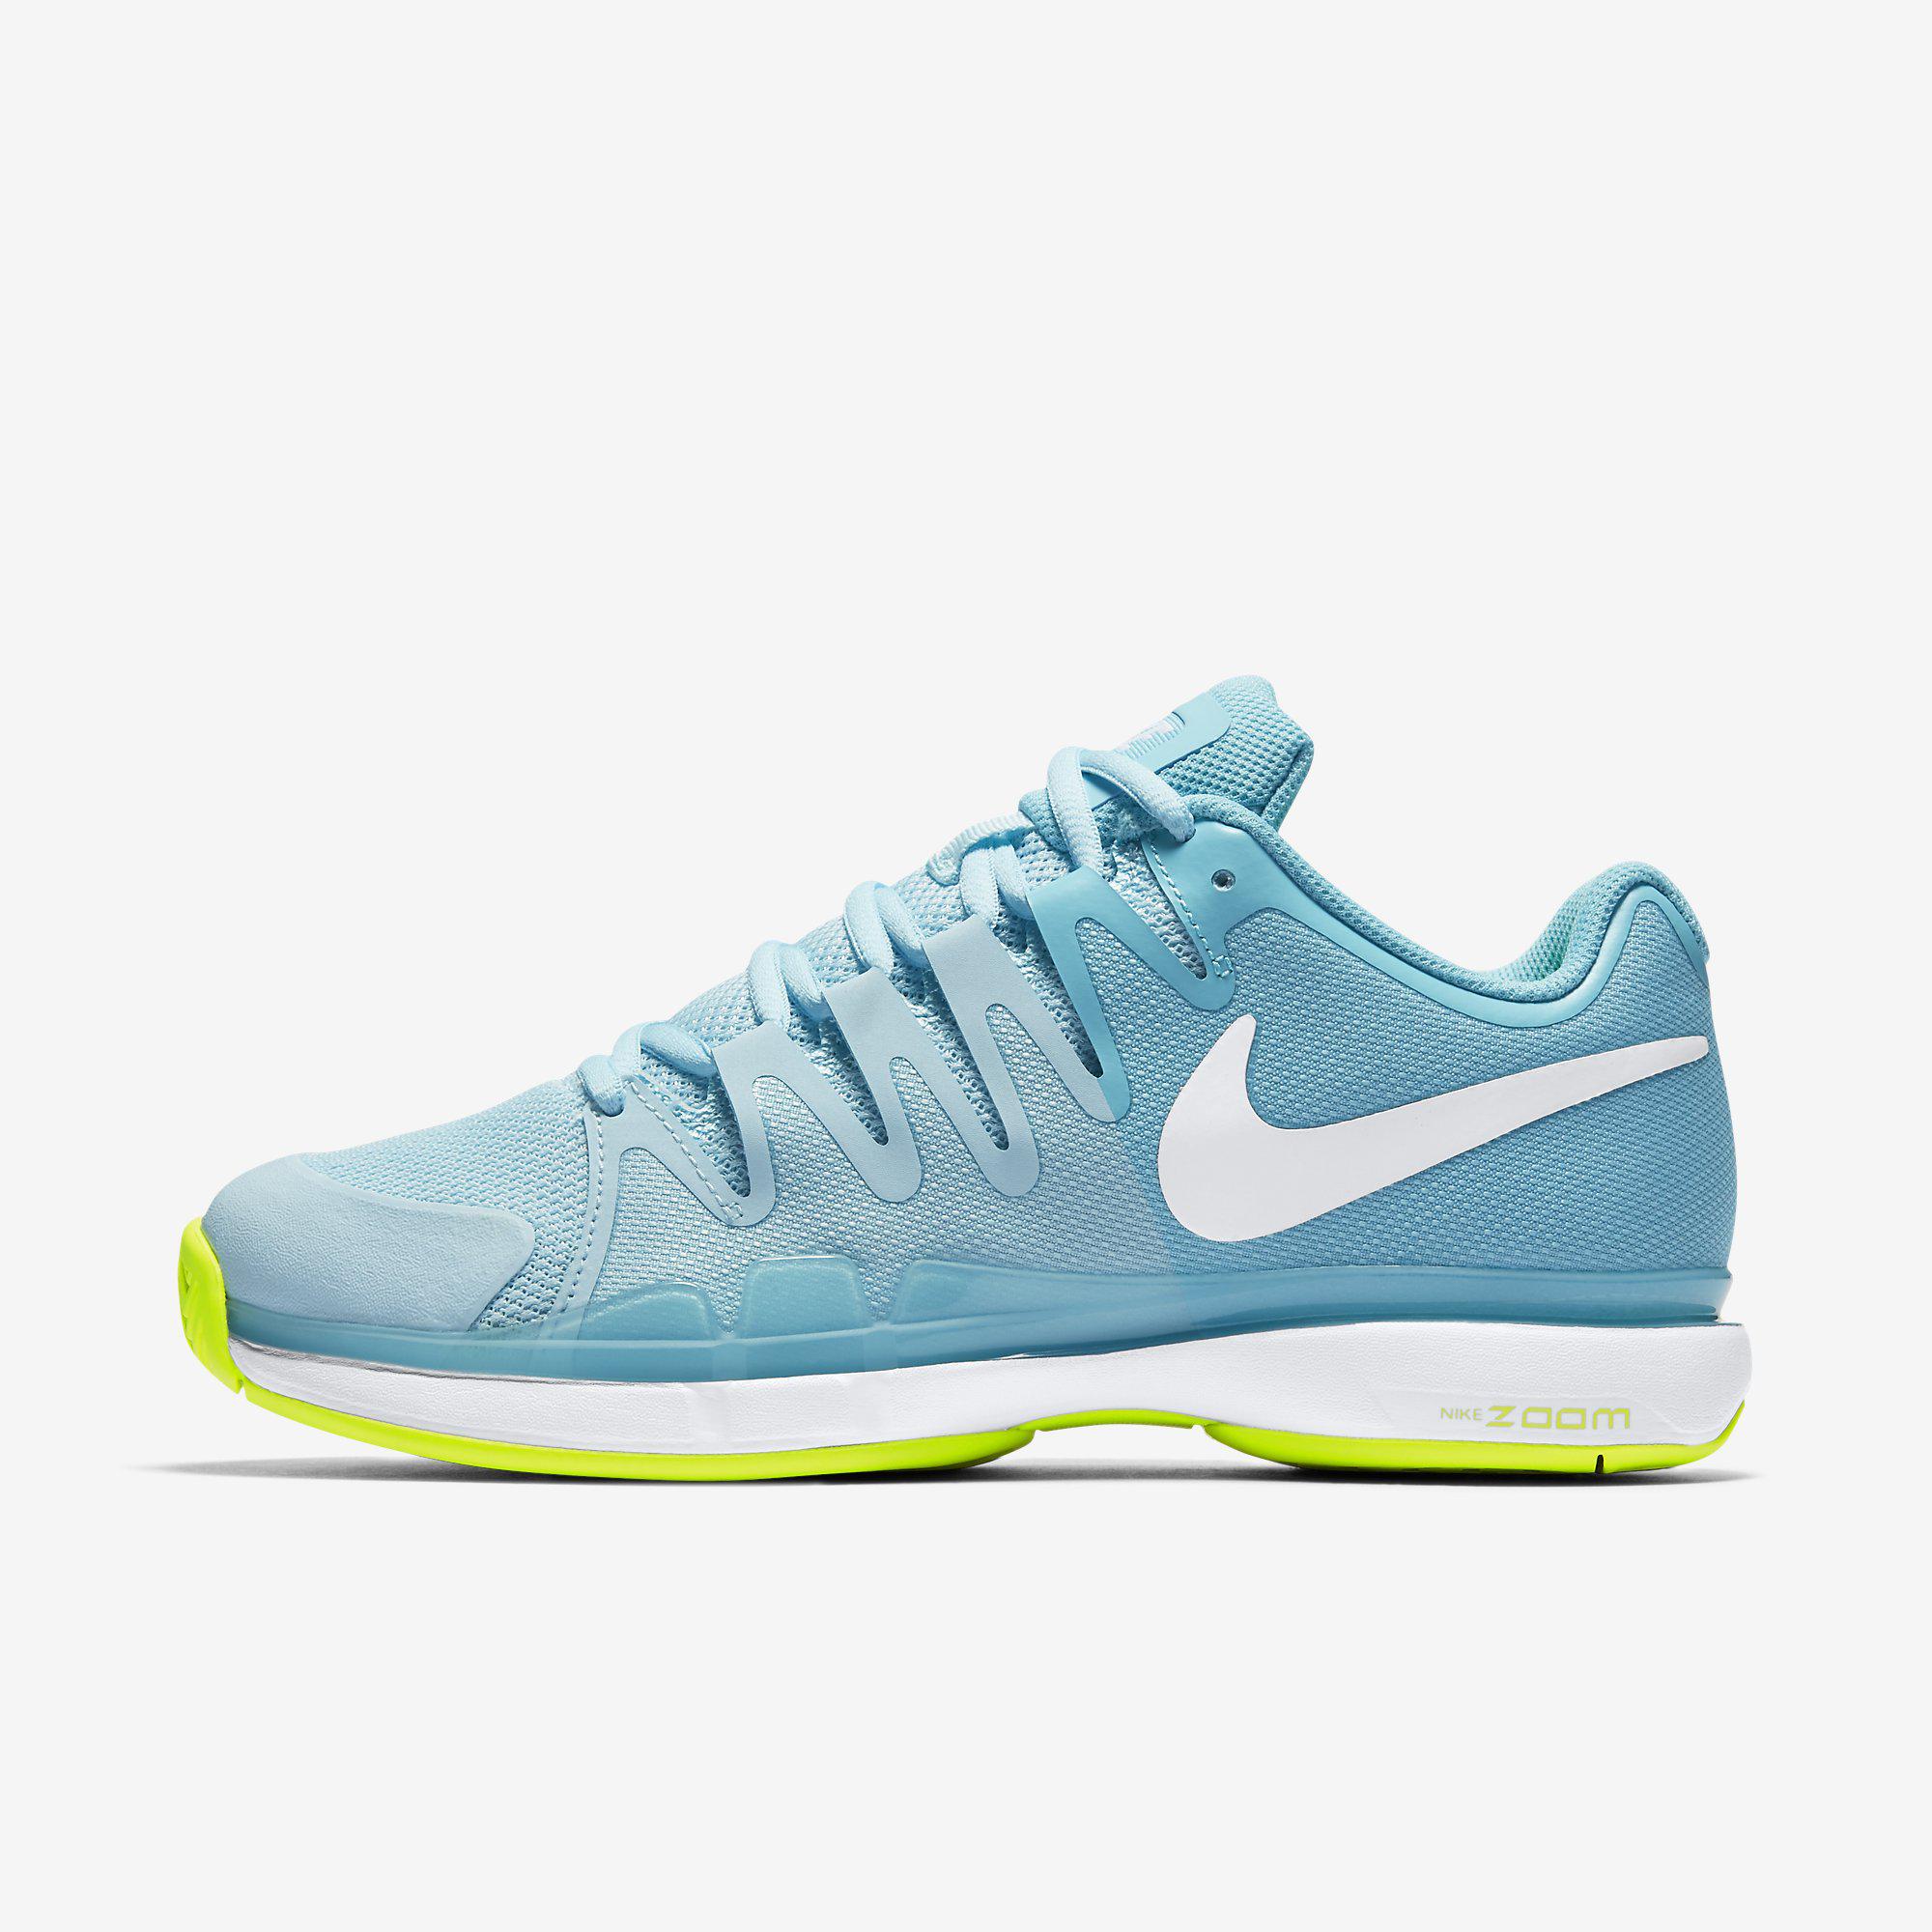 Nike Womens Zoom Vapor 9.5 Tennis Shoes - Blue/Volt - Tennisnuts.com